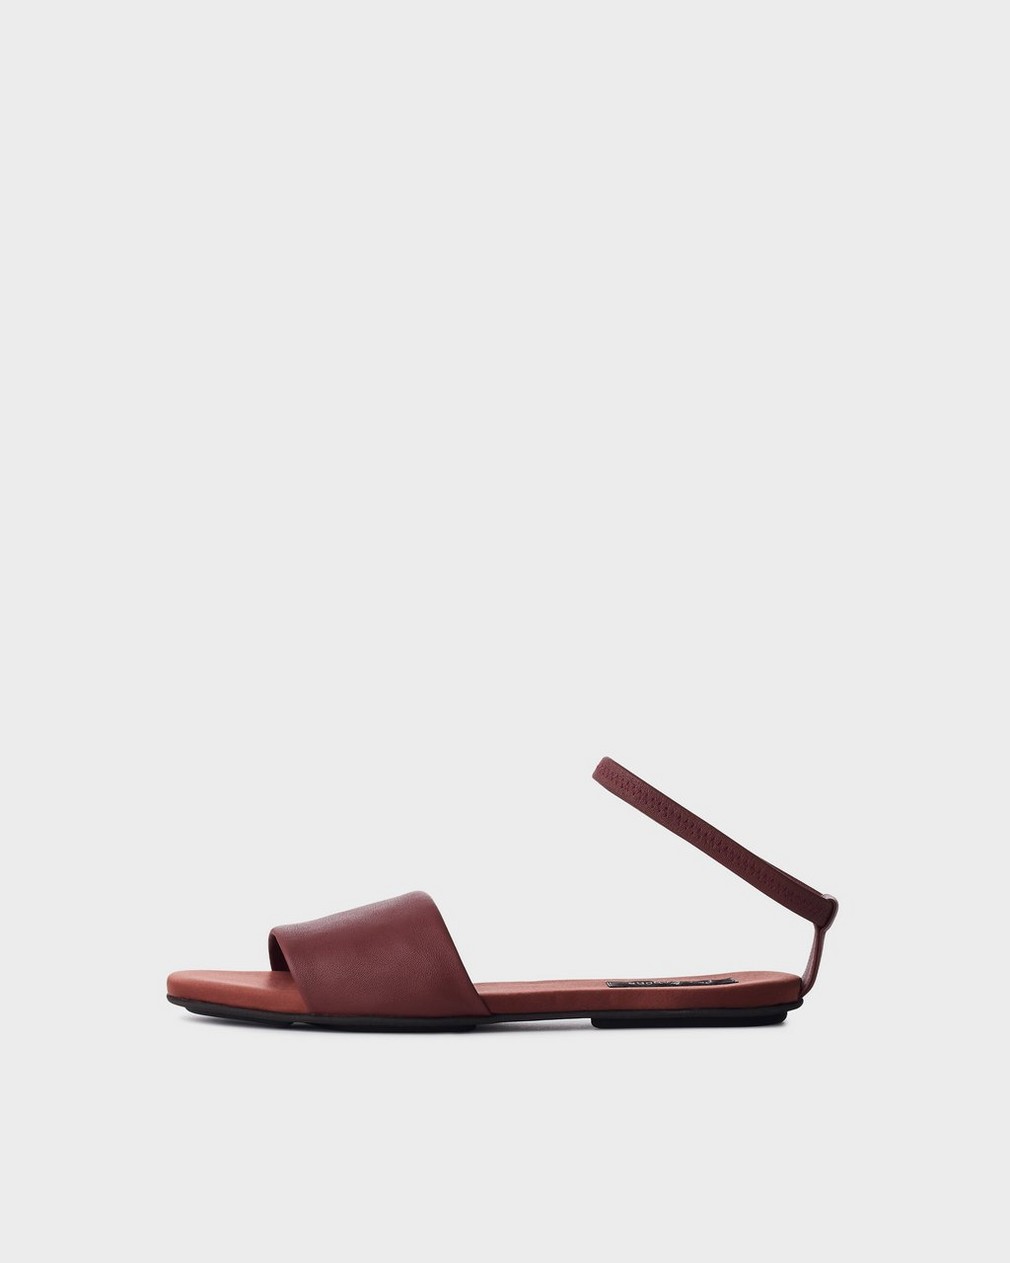 Ellory Sandal - Leather